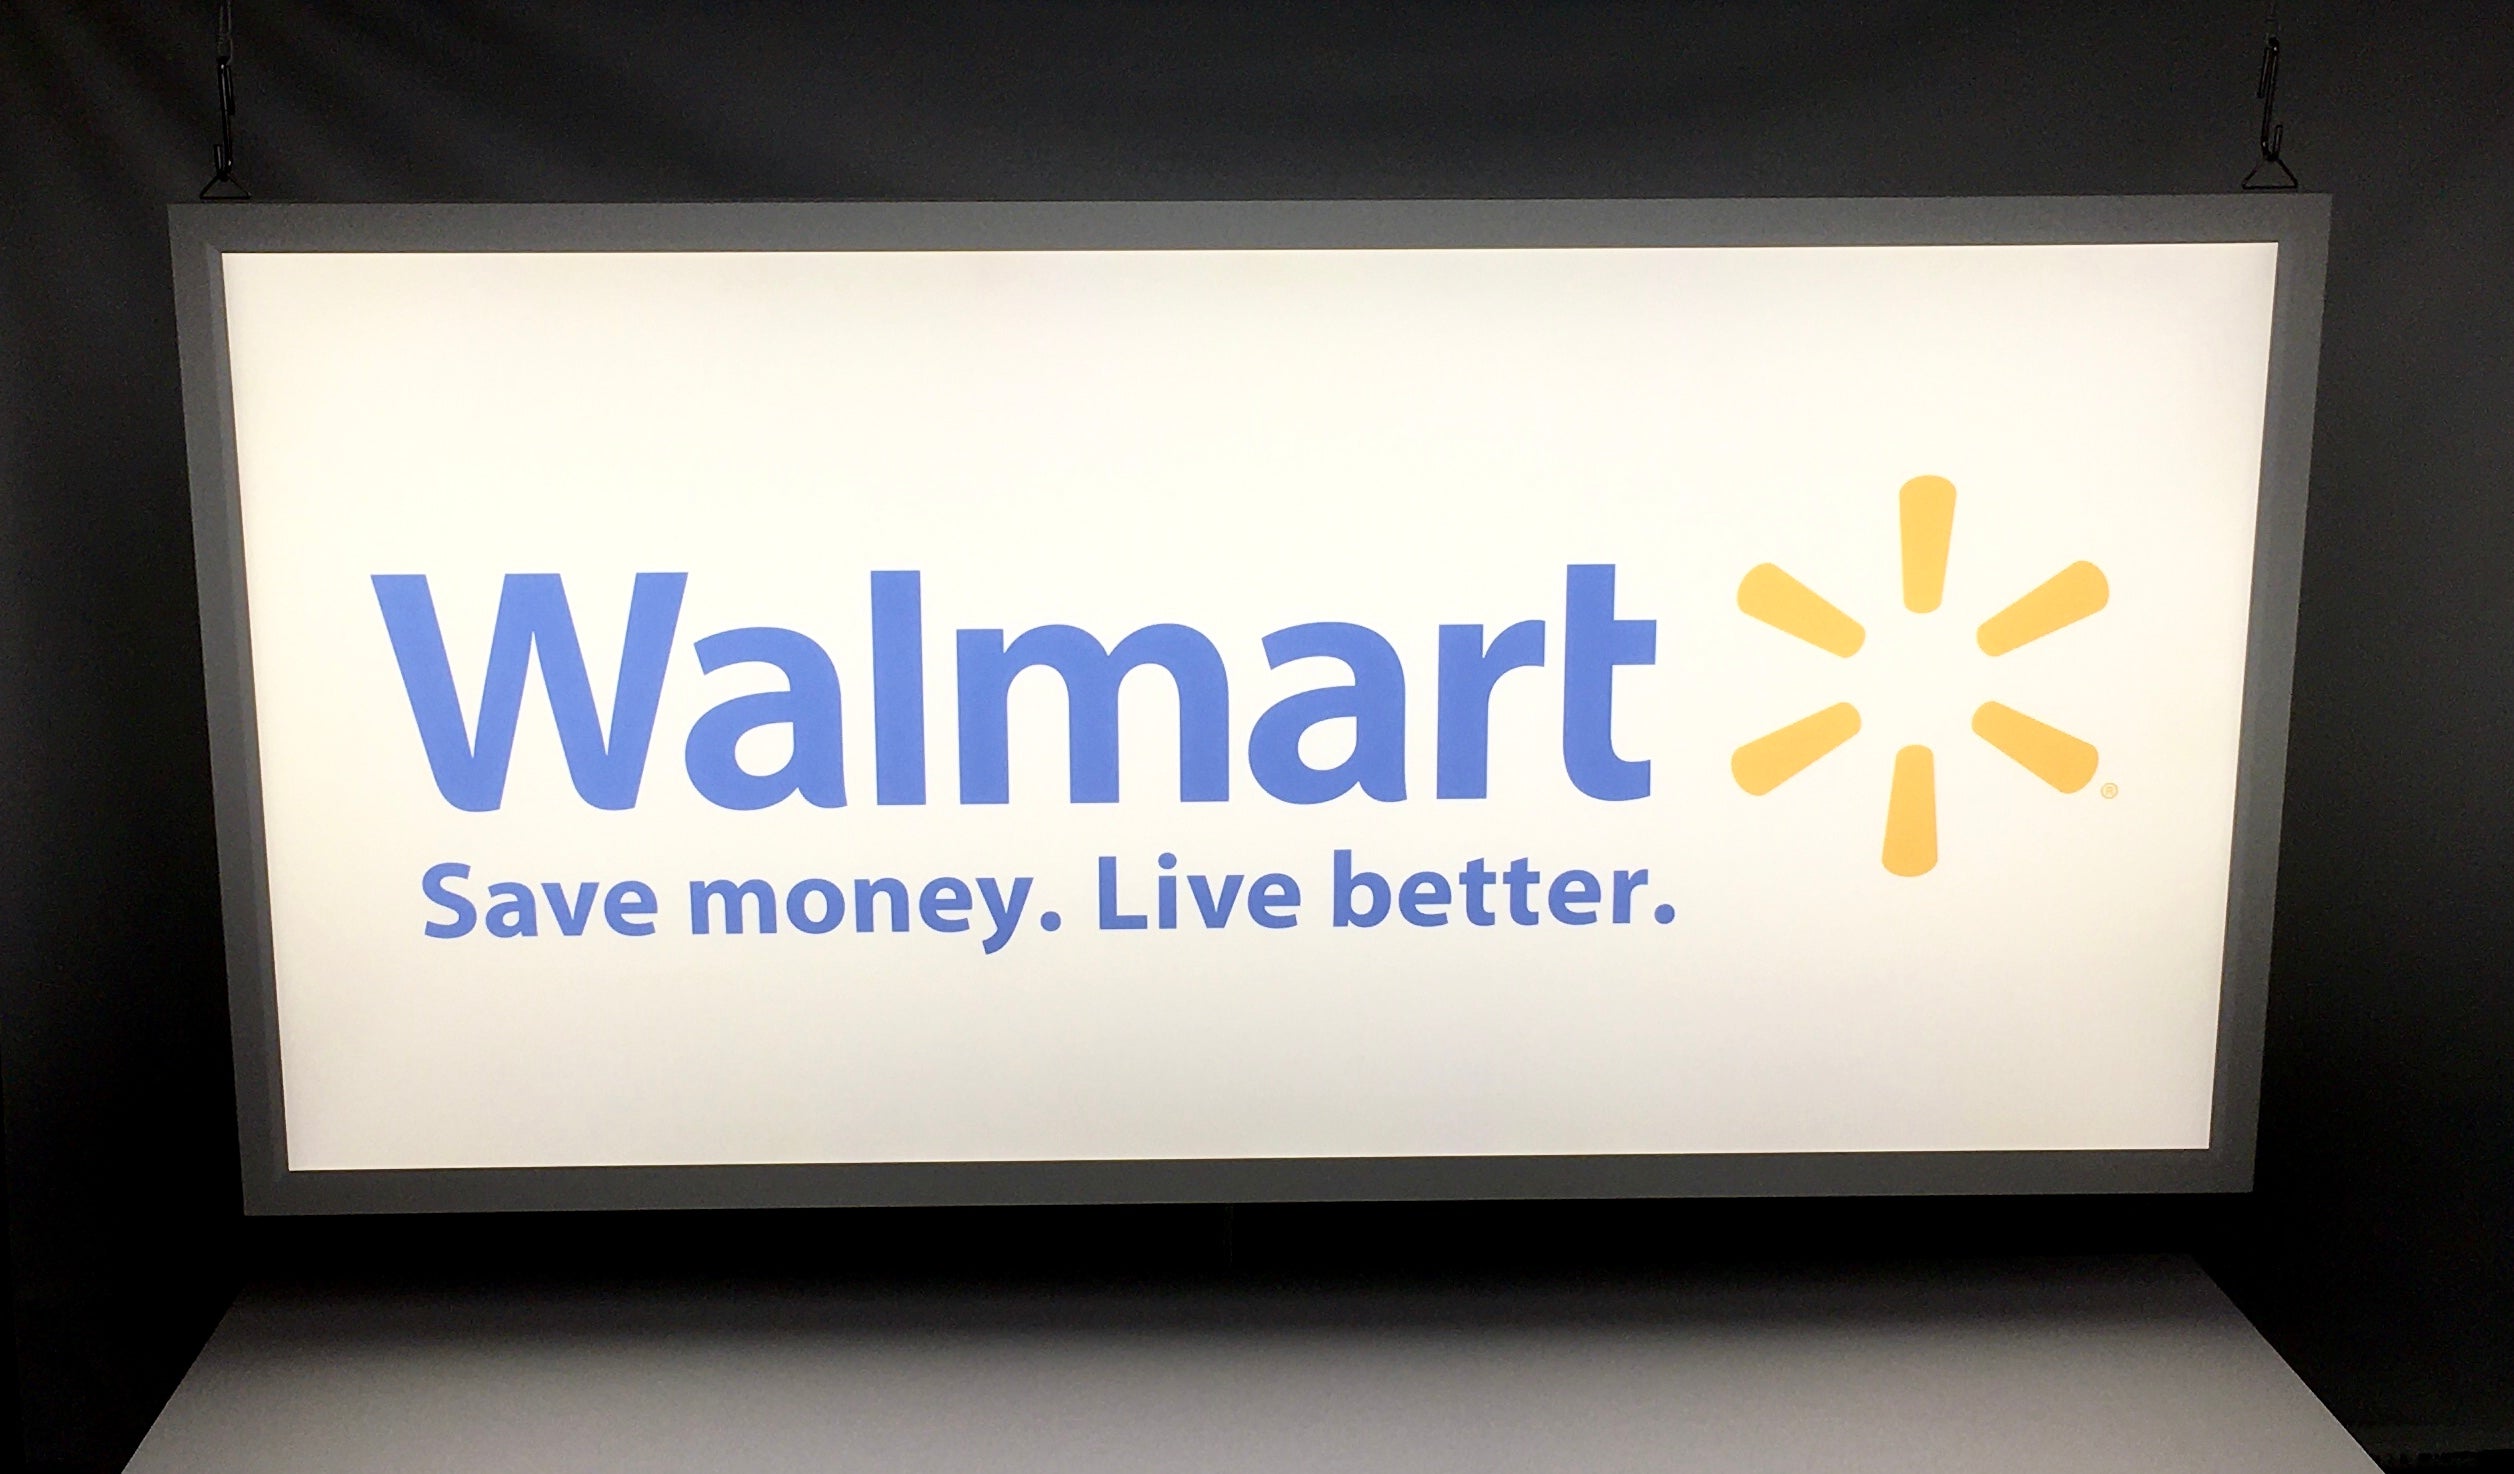 Walmart.com, Save Money. Live Better